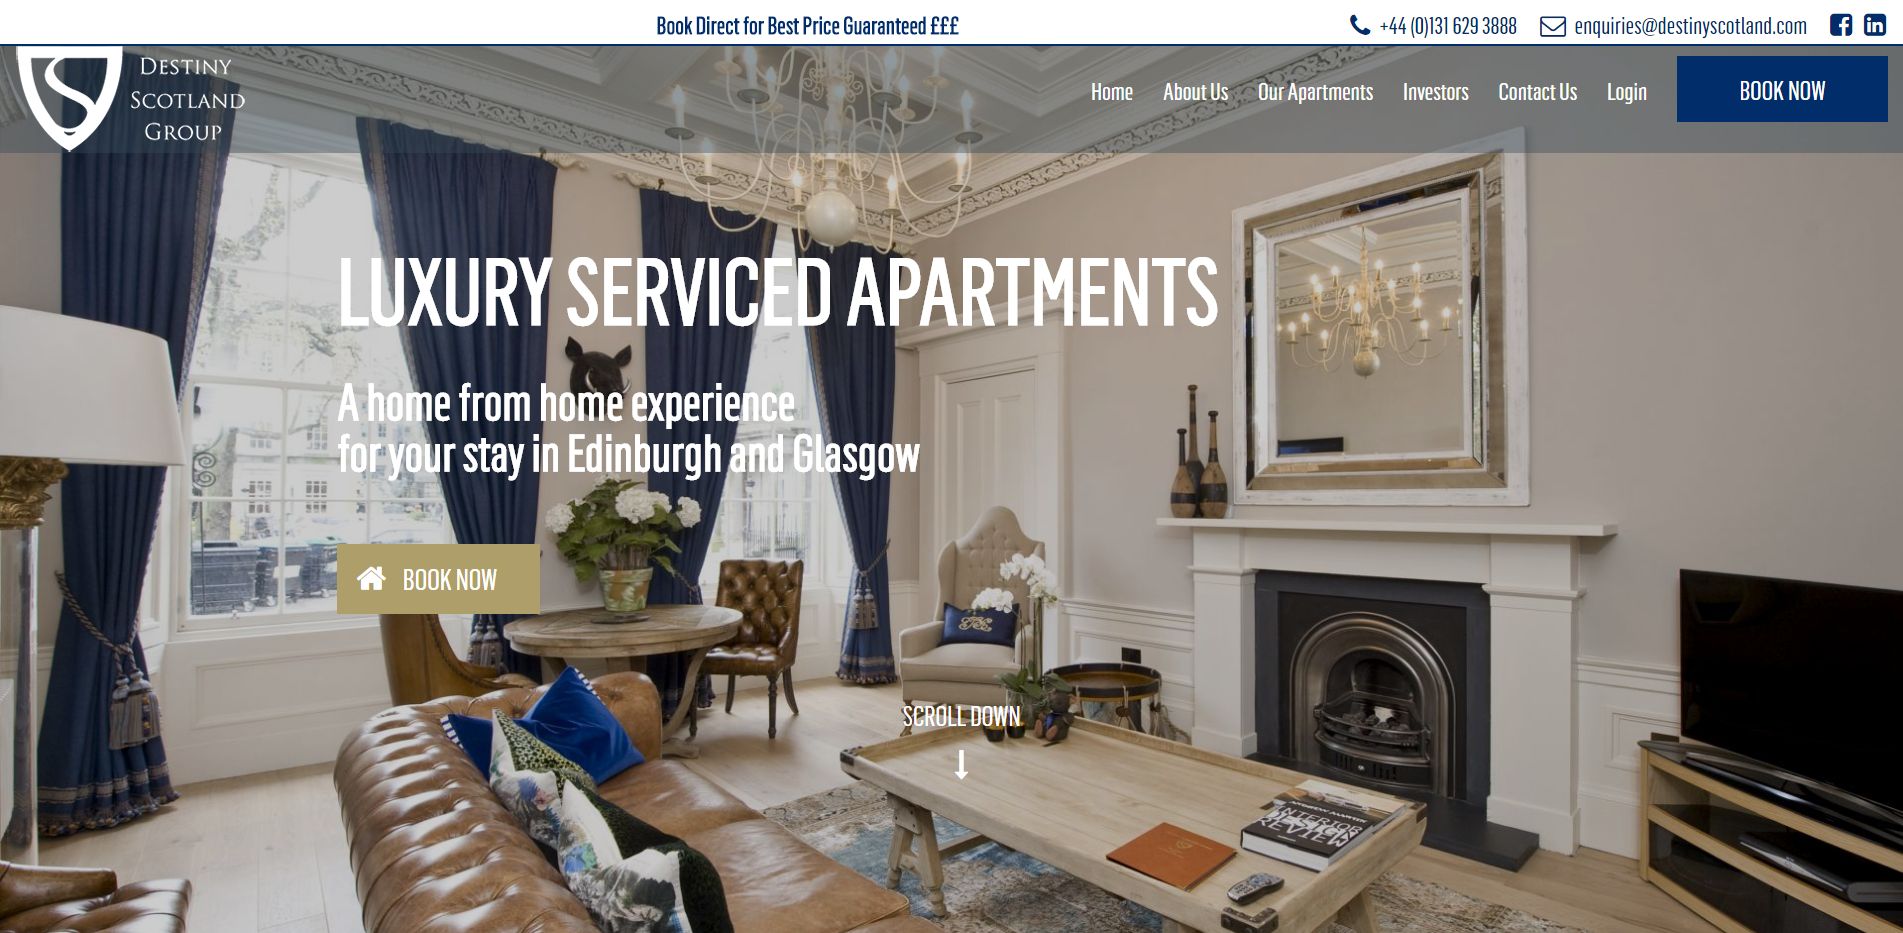 Destiny Scotland Luxury Scottish Apartments to Rent